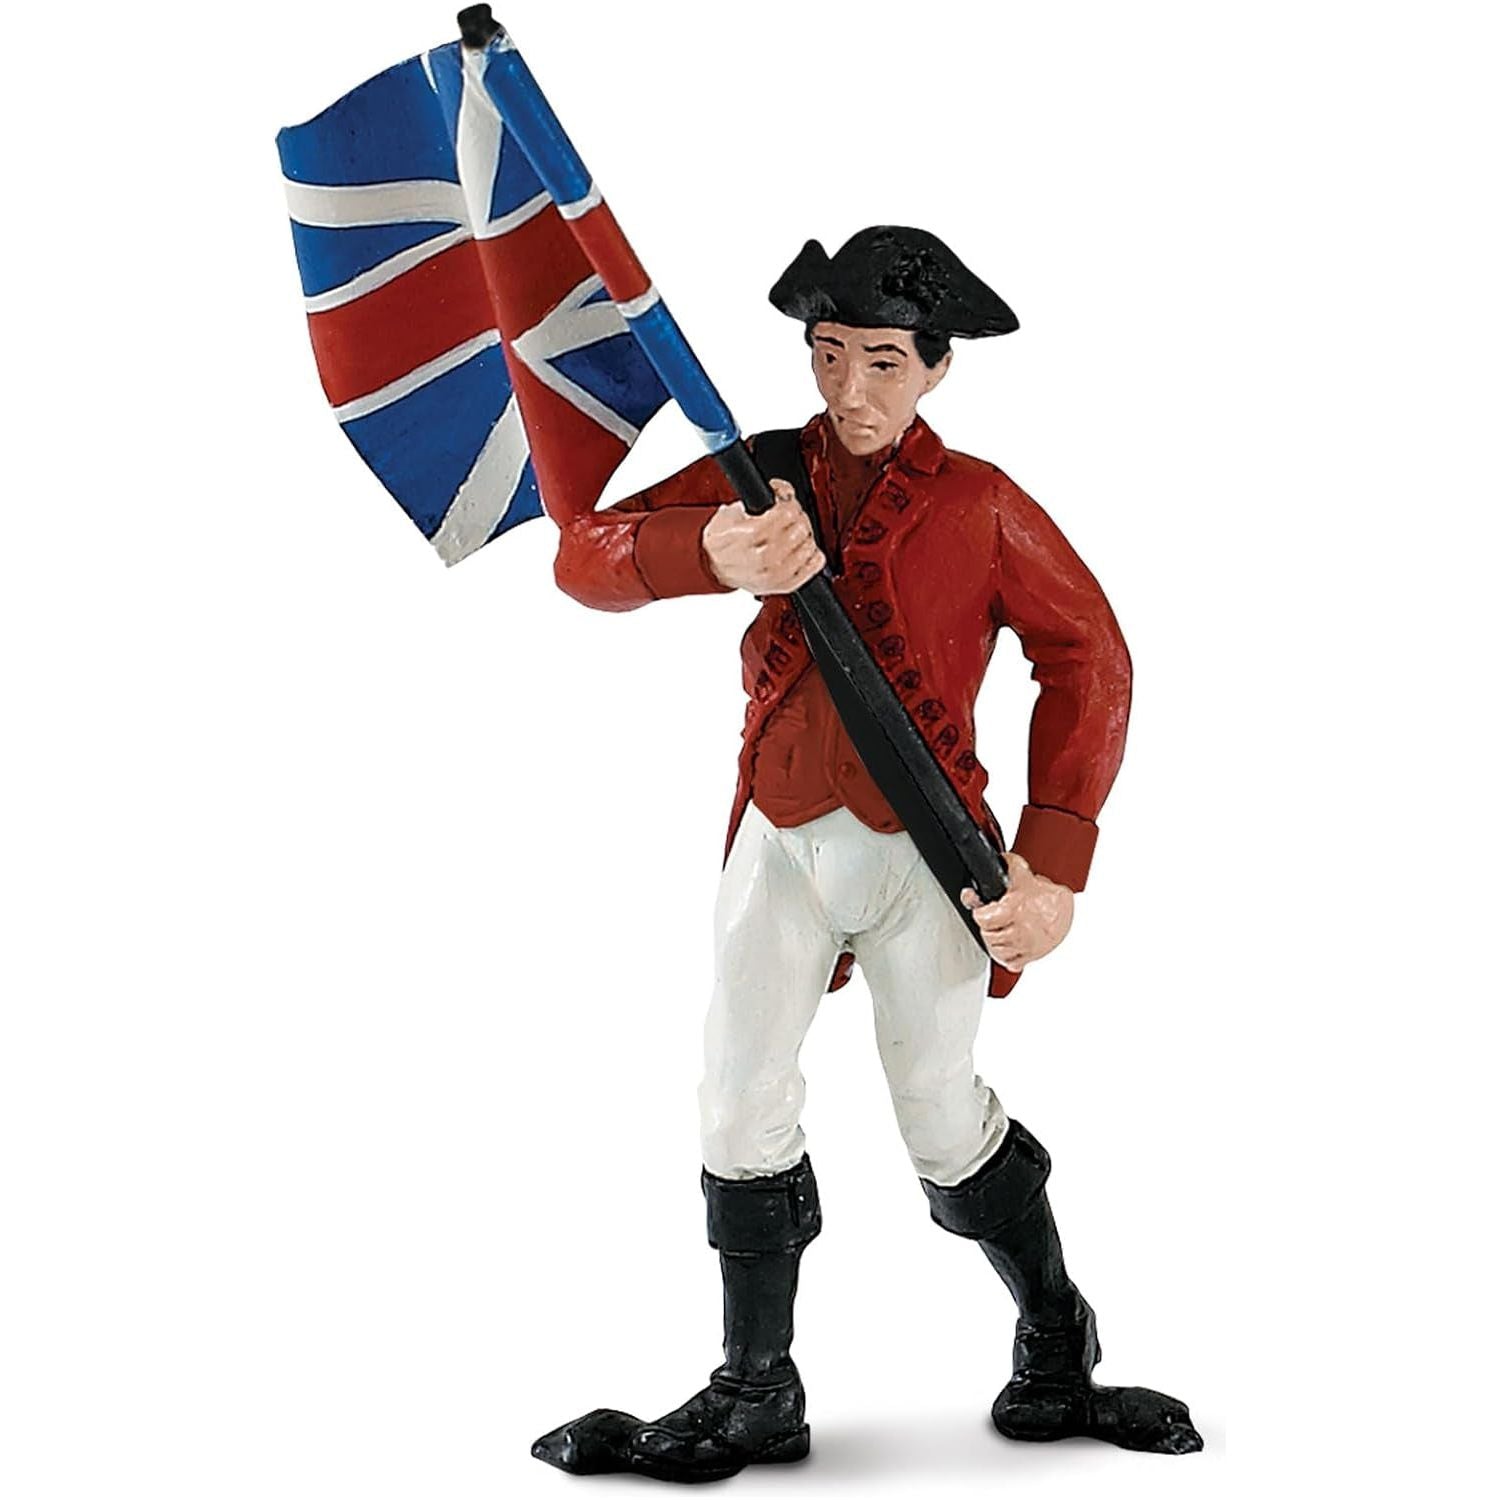 Revolutionary War British Army Miniature Figures